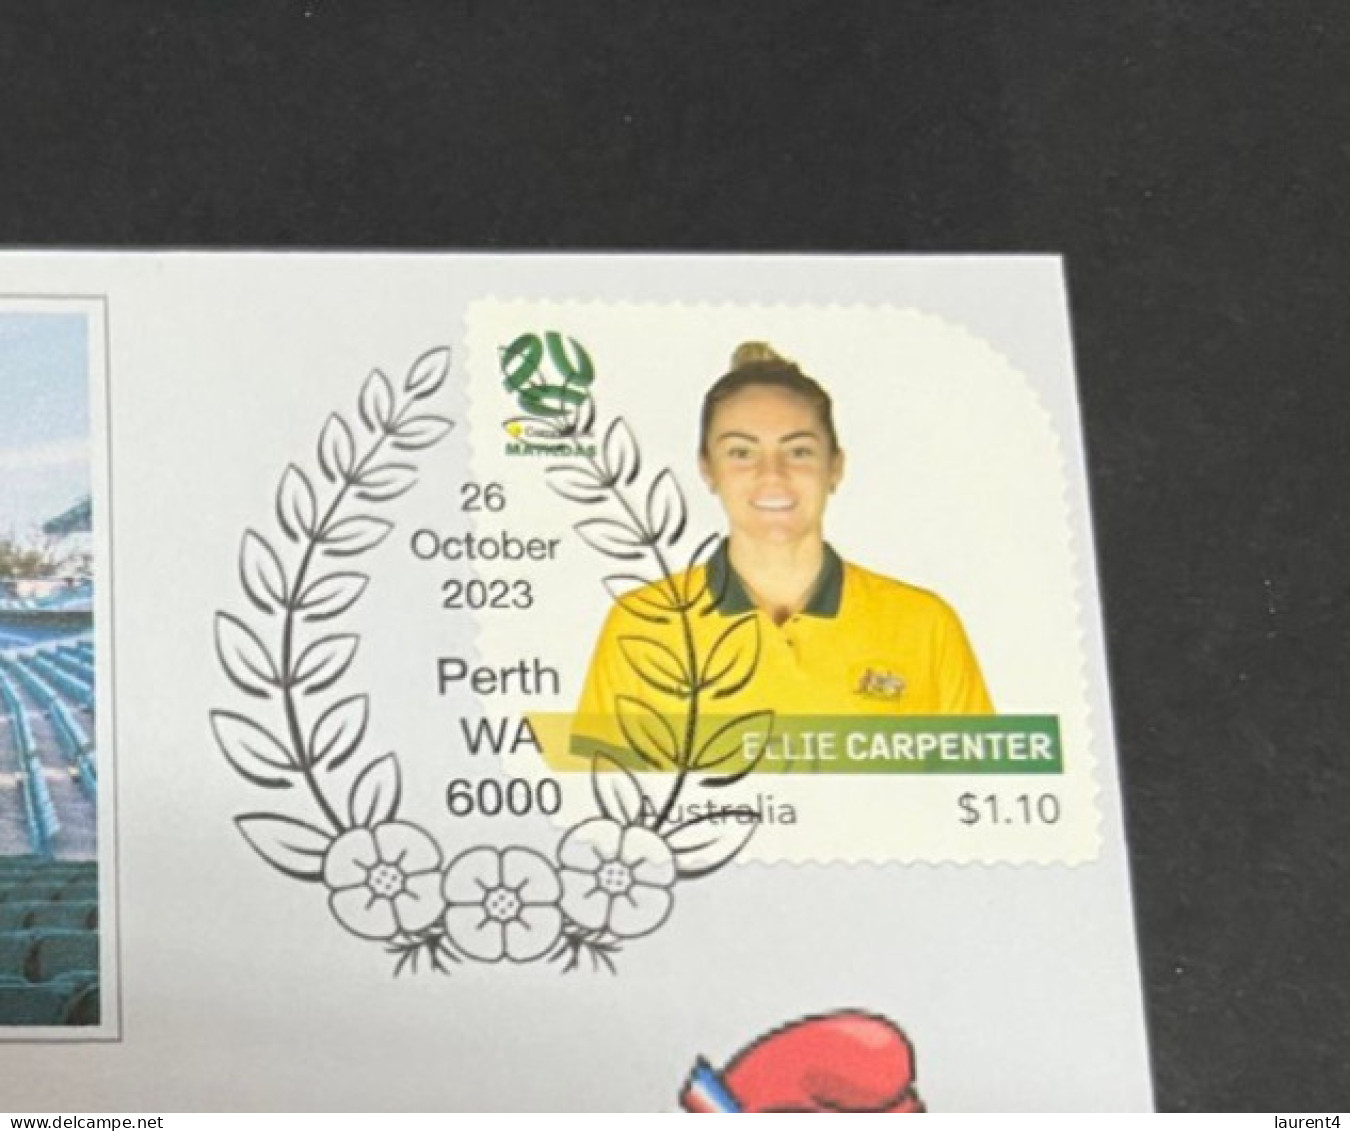 27-10-2023 (5 U 27) Australia (2) V Iran (0) - Matildas Olympic 2024 Qualifiers (match 1) 26-10-2023 In Perth - Zomer 2024: Parijs